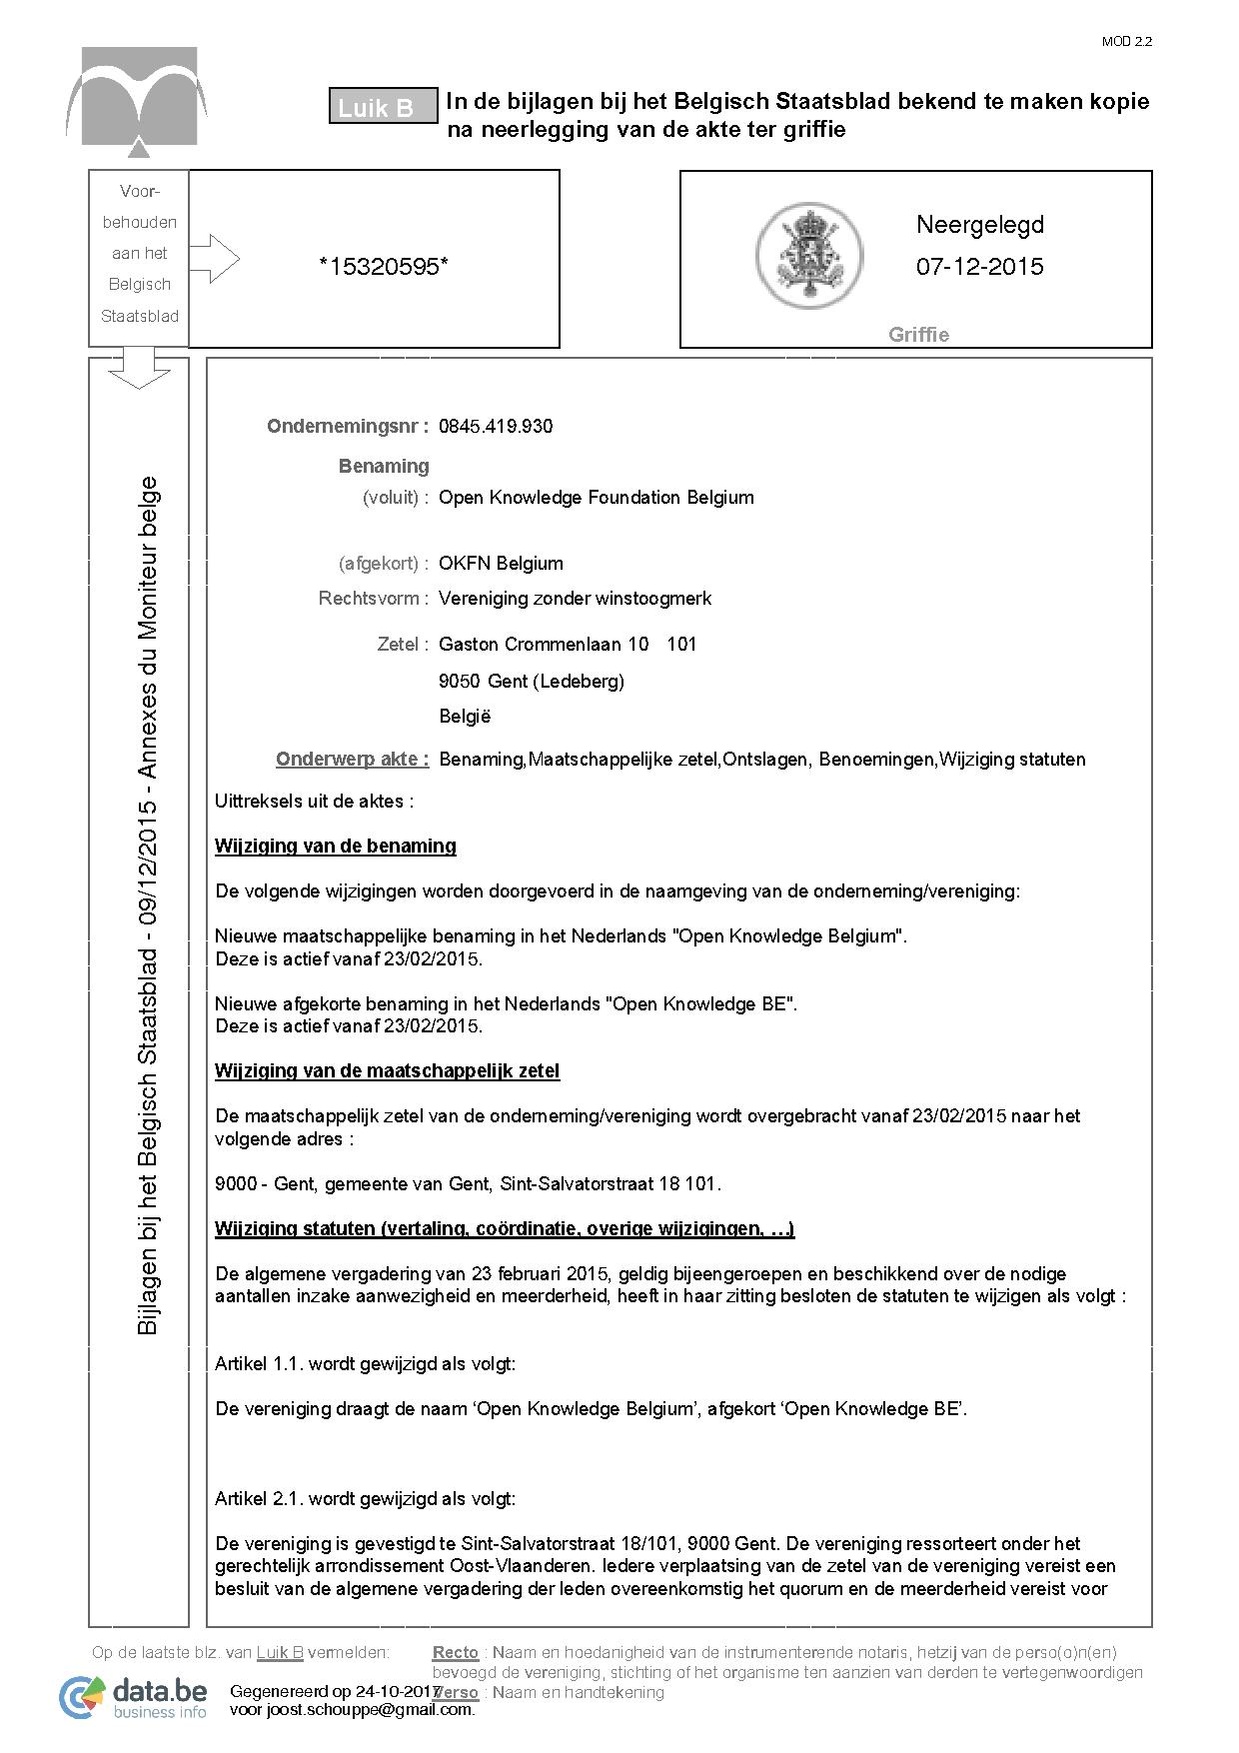 OSM-BE Articles of Association updates-nl.pdf